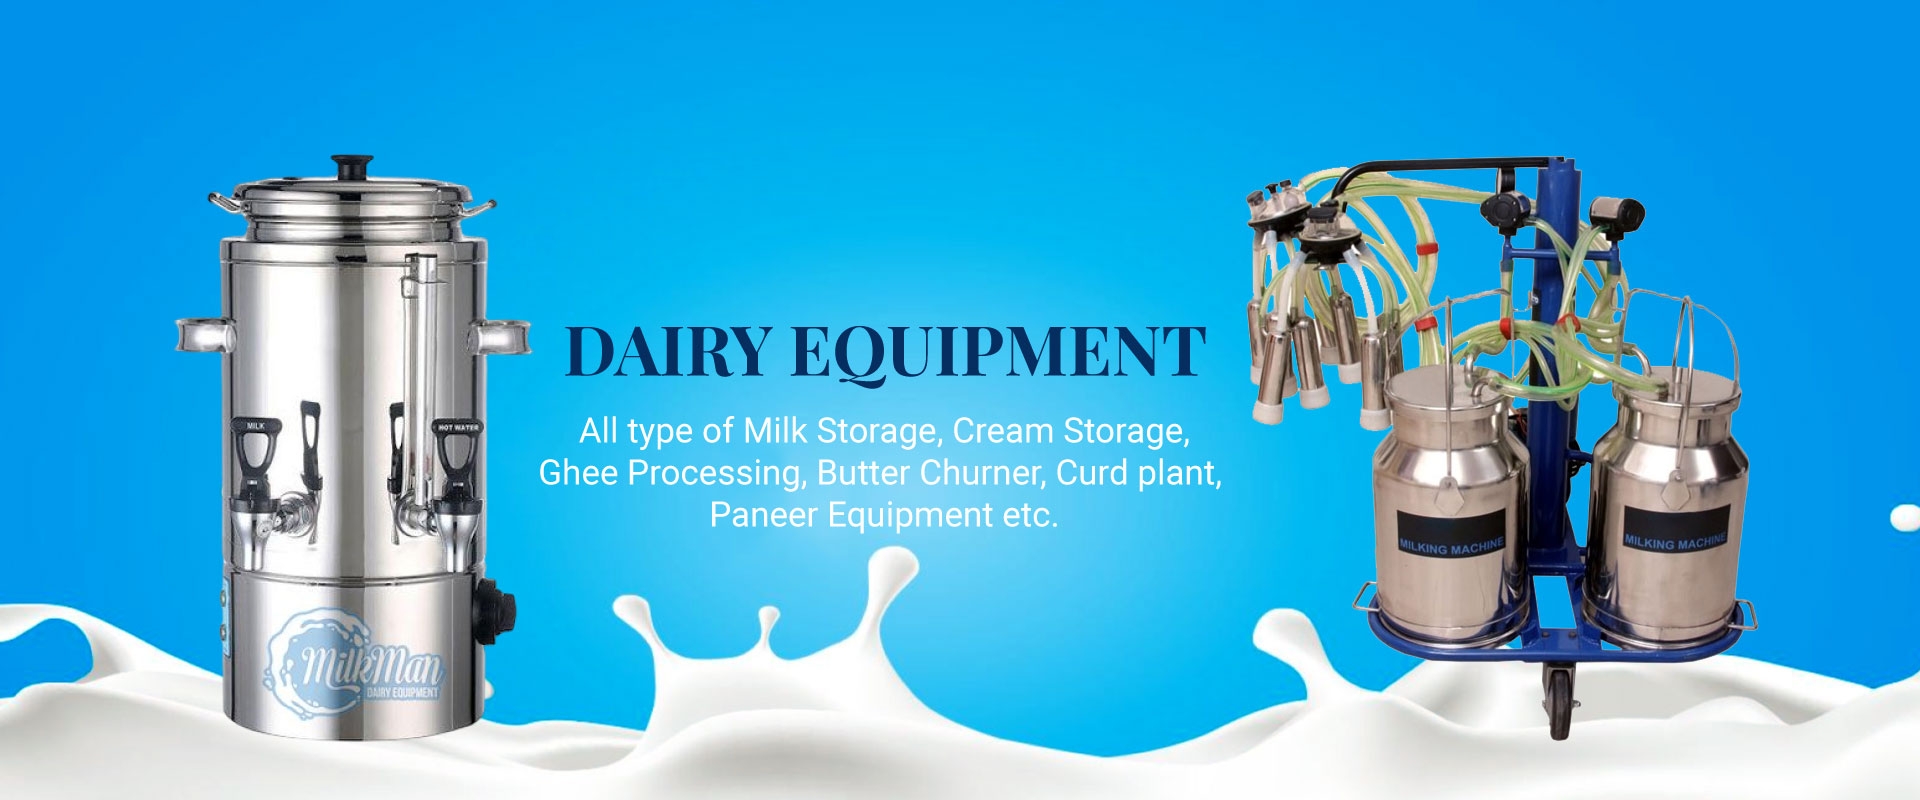 Dairy Equipment in Himachal Pradesh